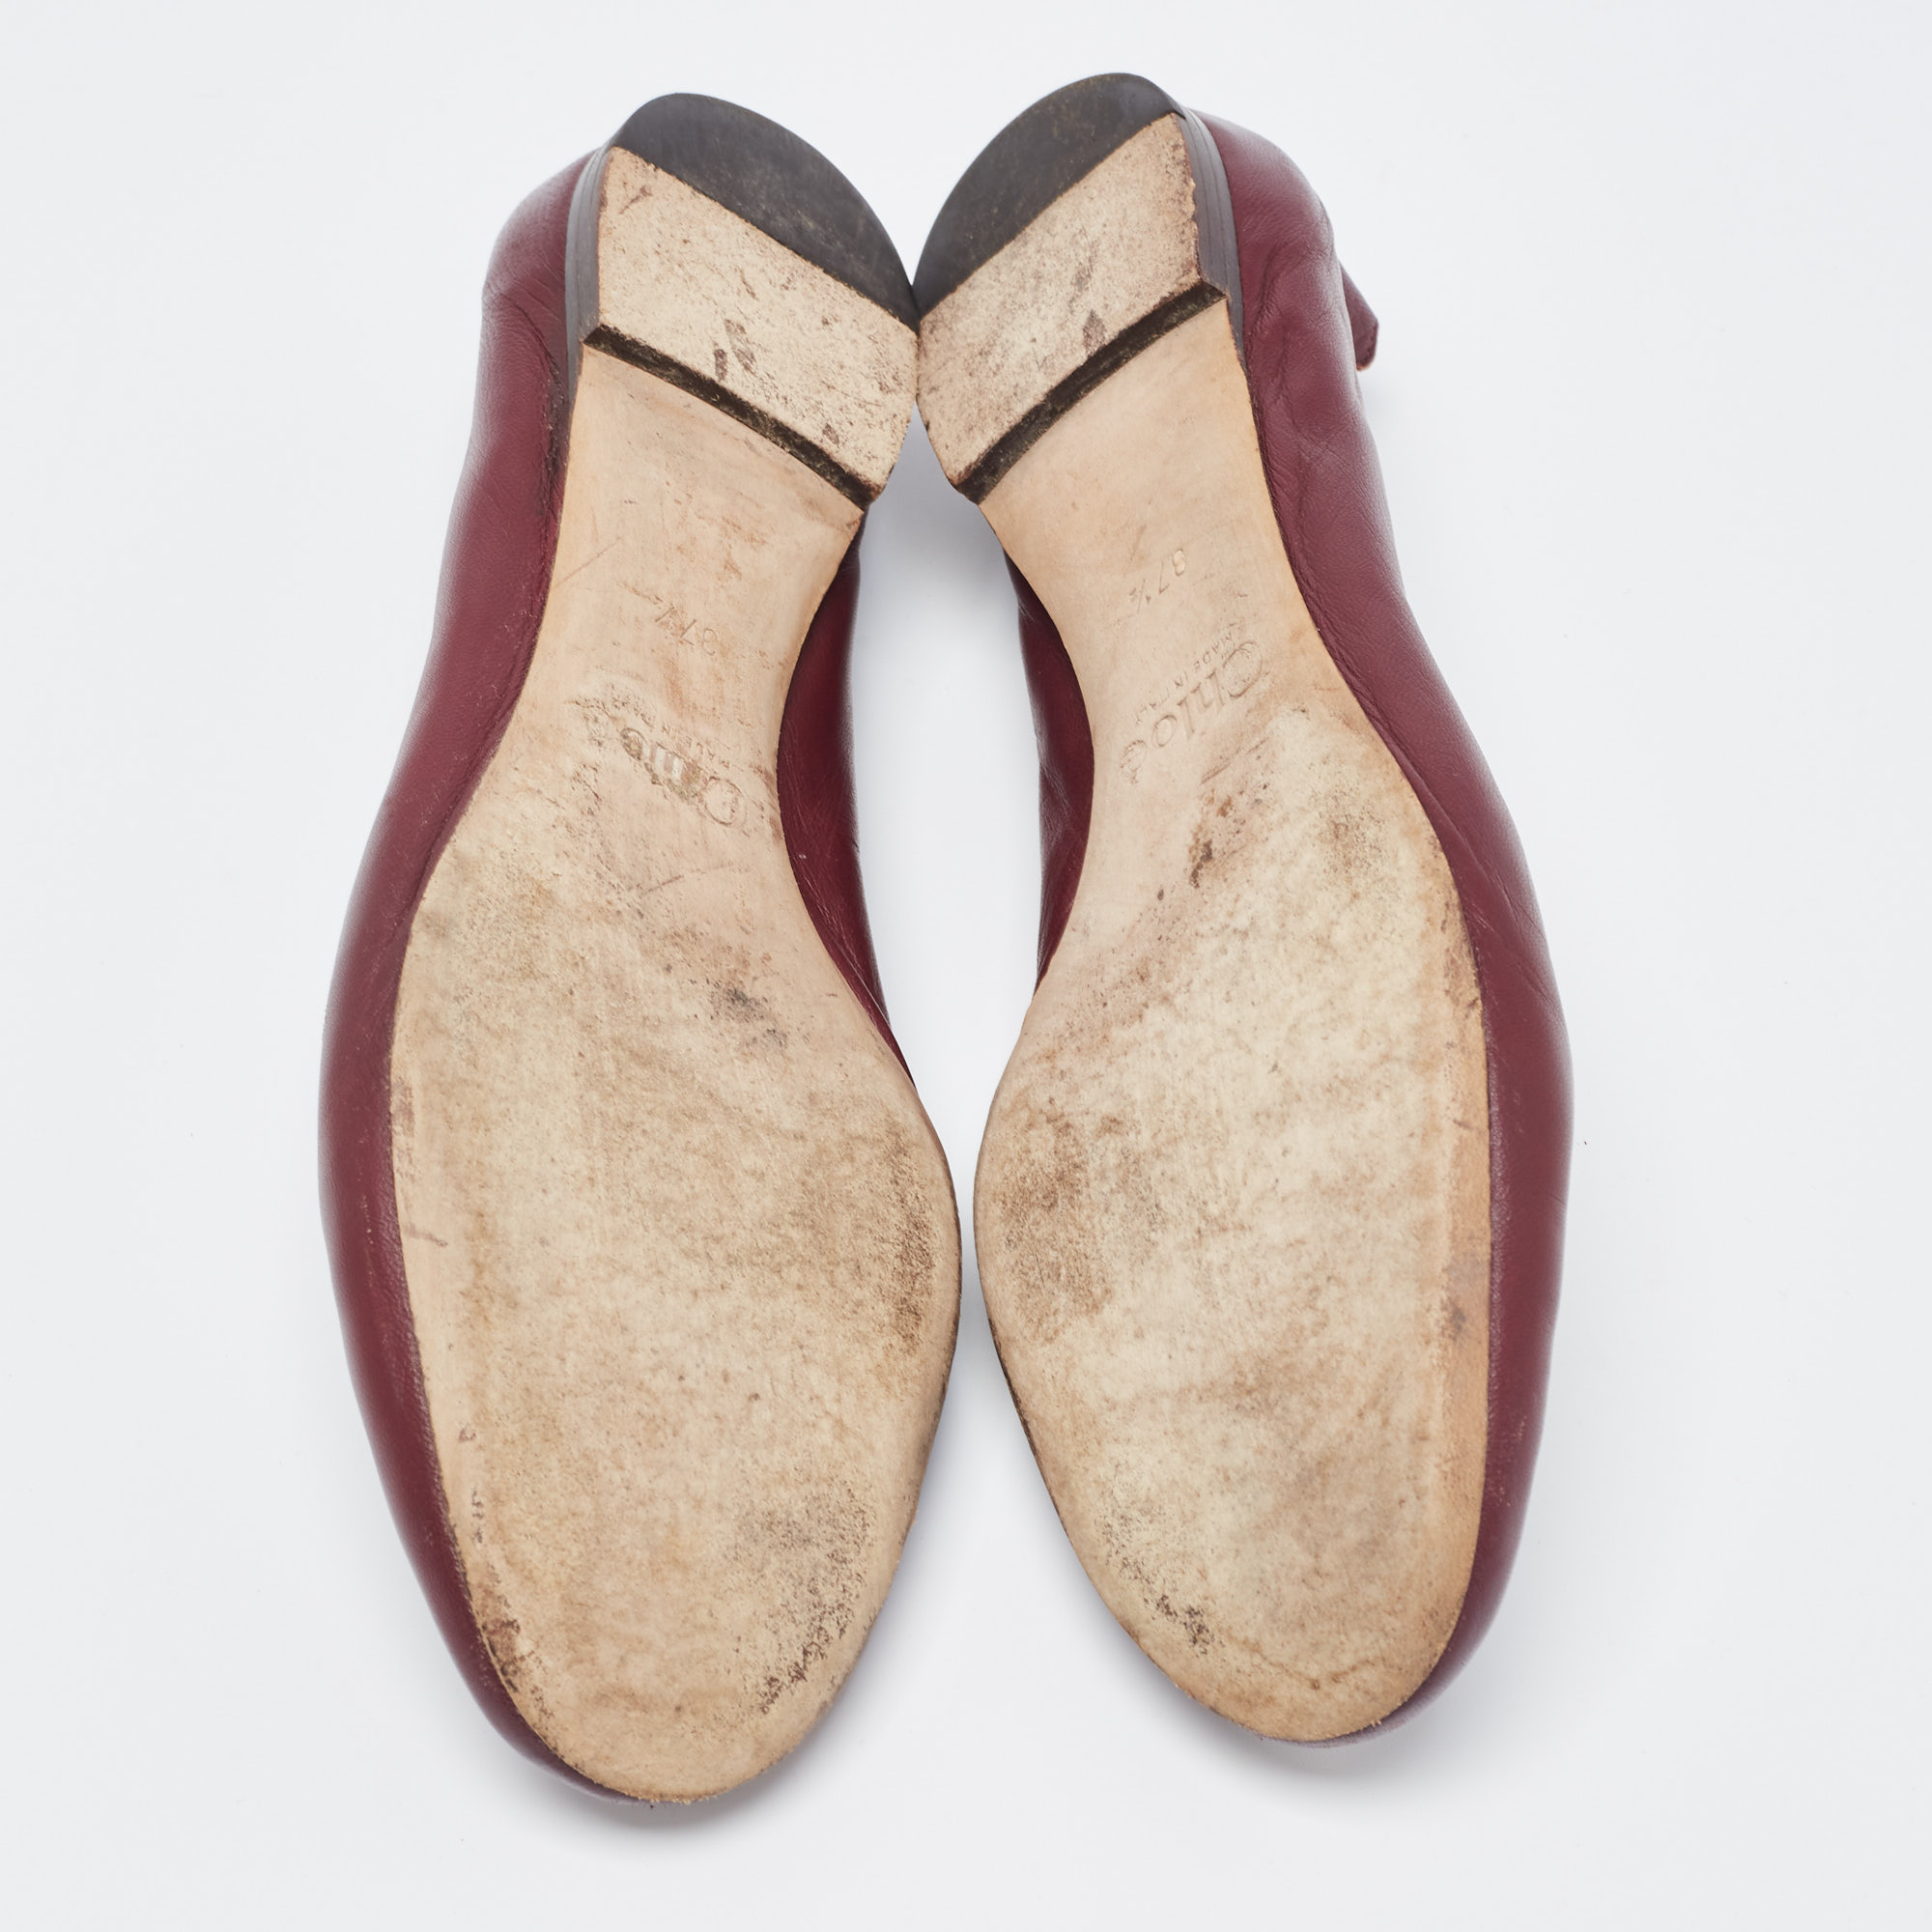 Chloe Burgundy Leather Lauren Ballet Flats Size 37.5